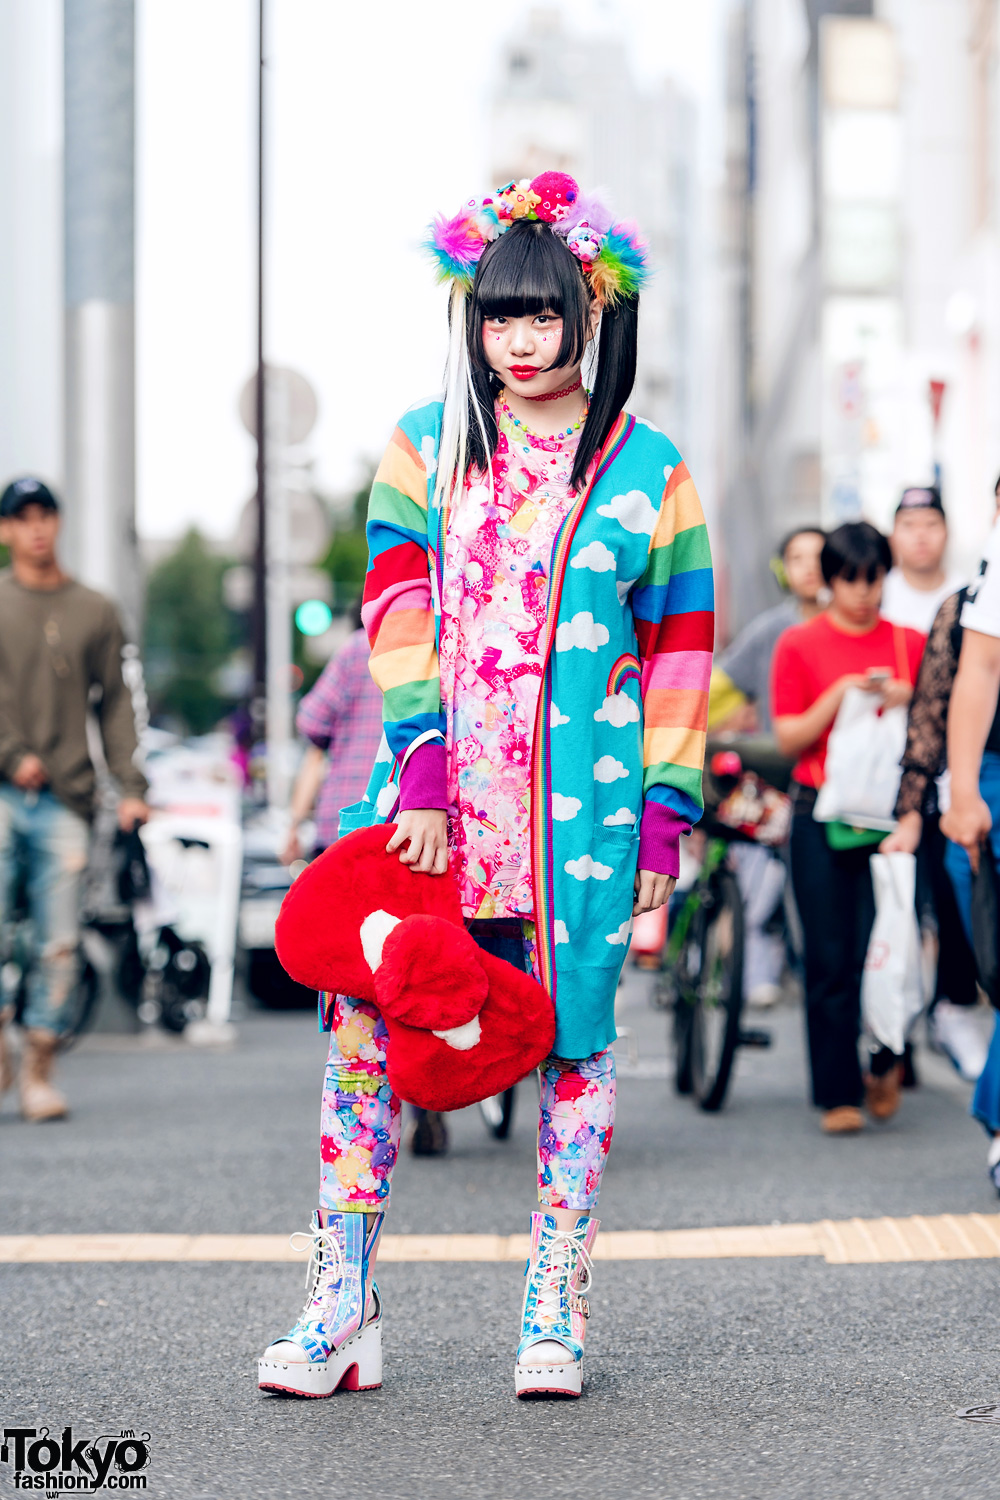 Kawaii Mixed Prints Harajuku Fashion in Tokyo w/ Galaxxxy, 6 